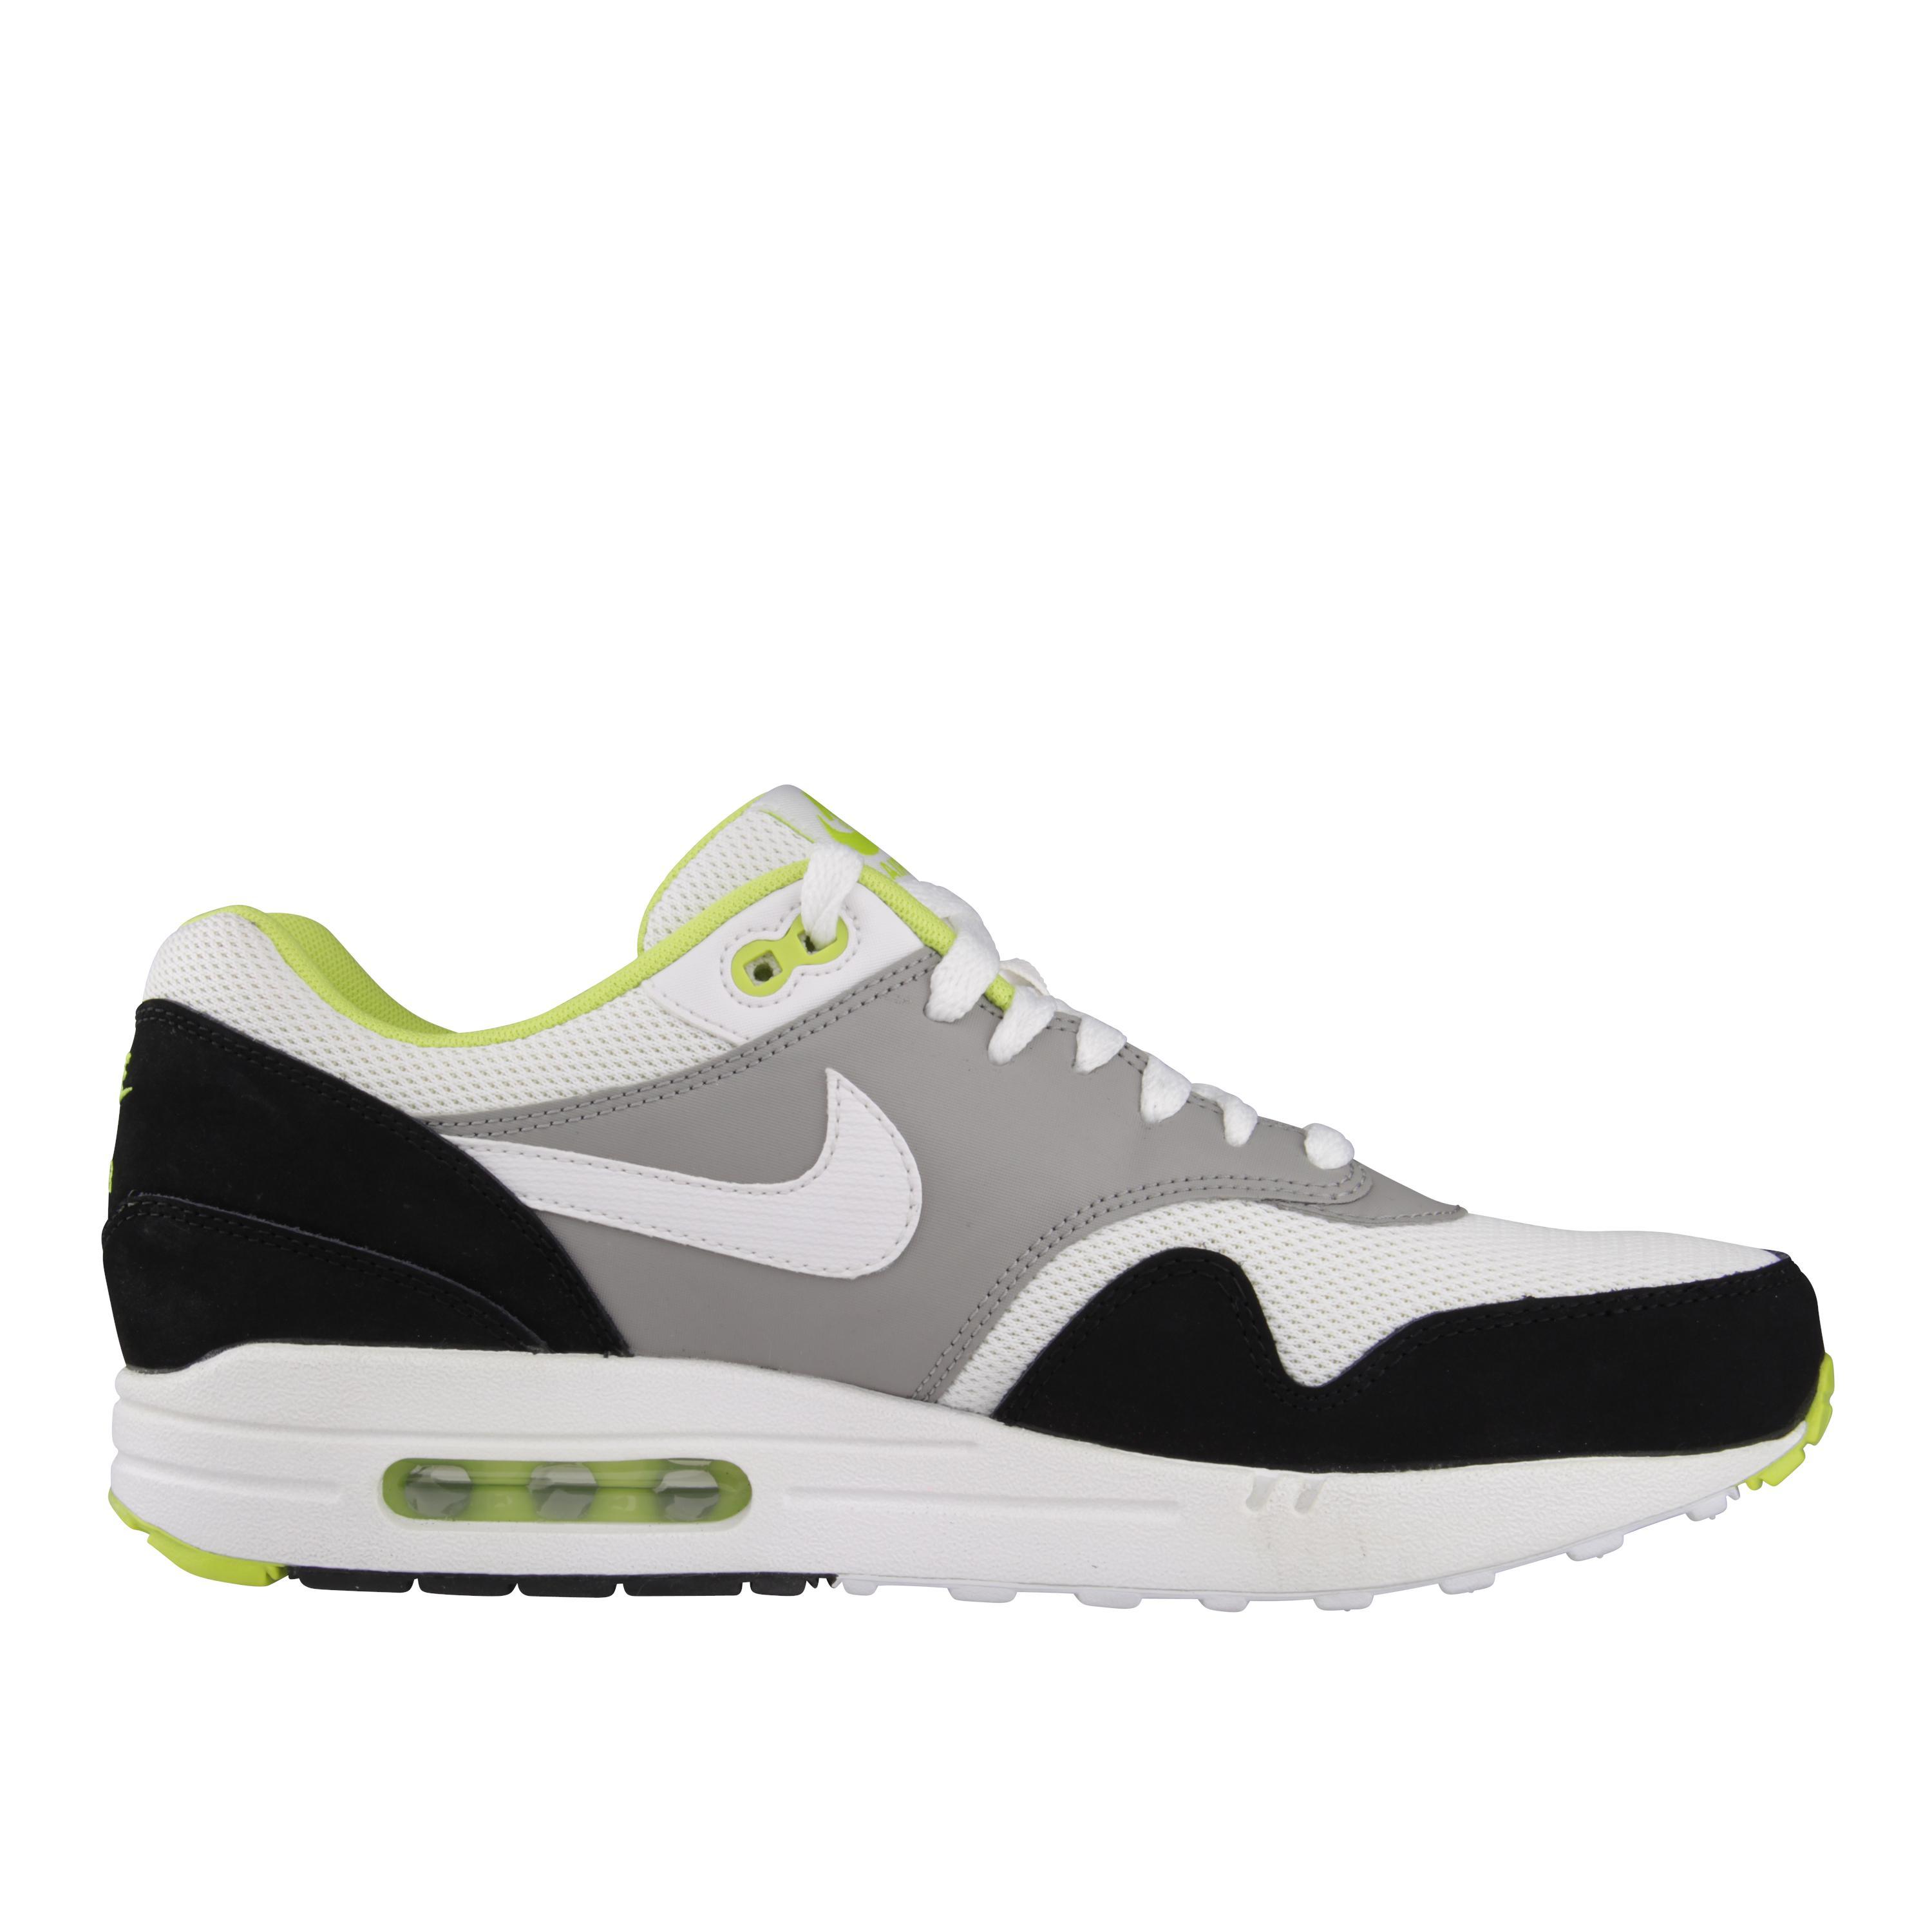 Foto Nike Air Max 1 Exclusiva @ Foot Locker foto 930574